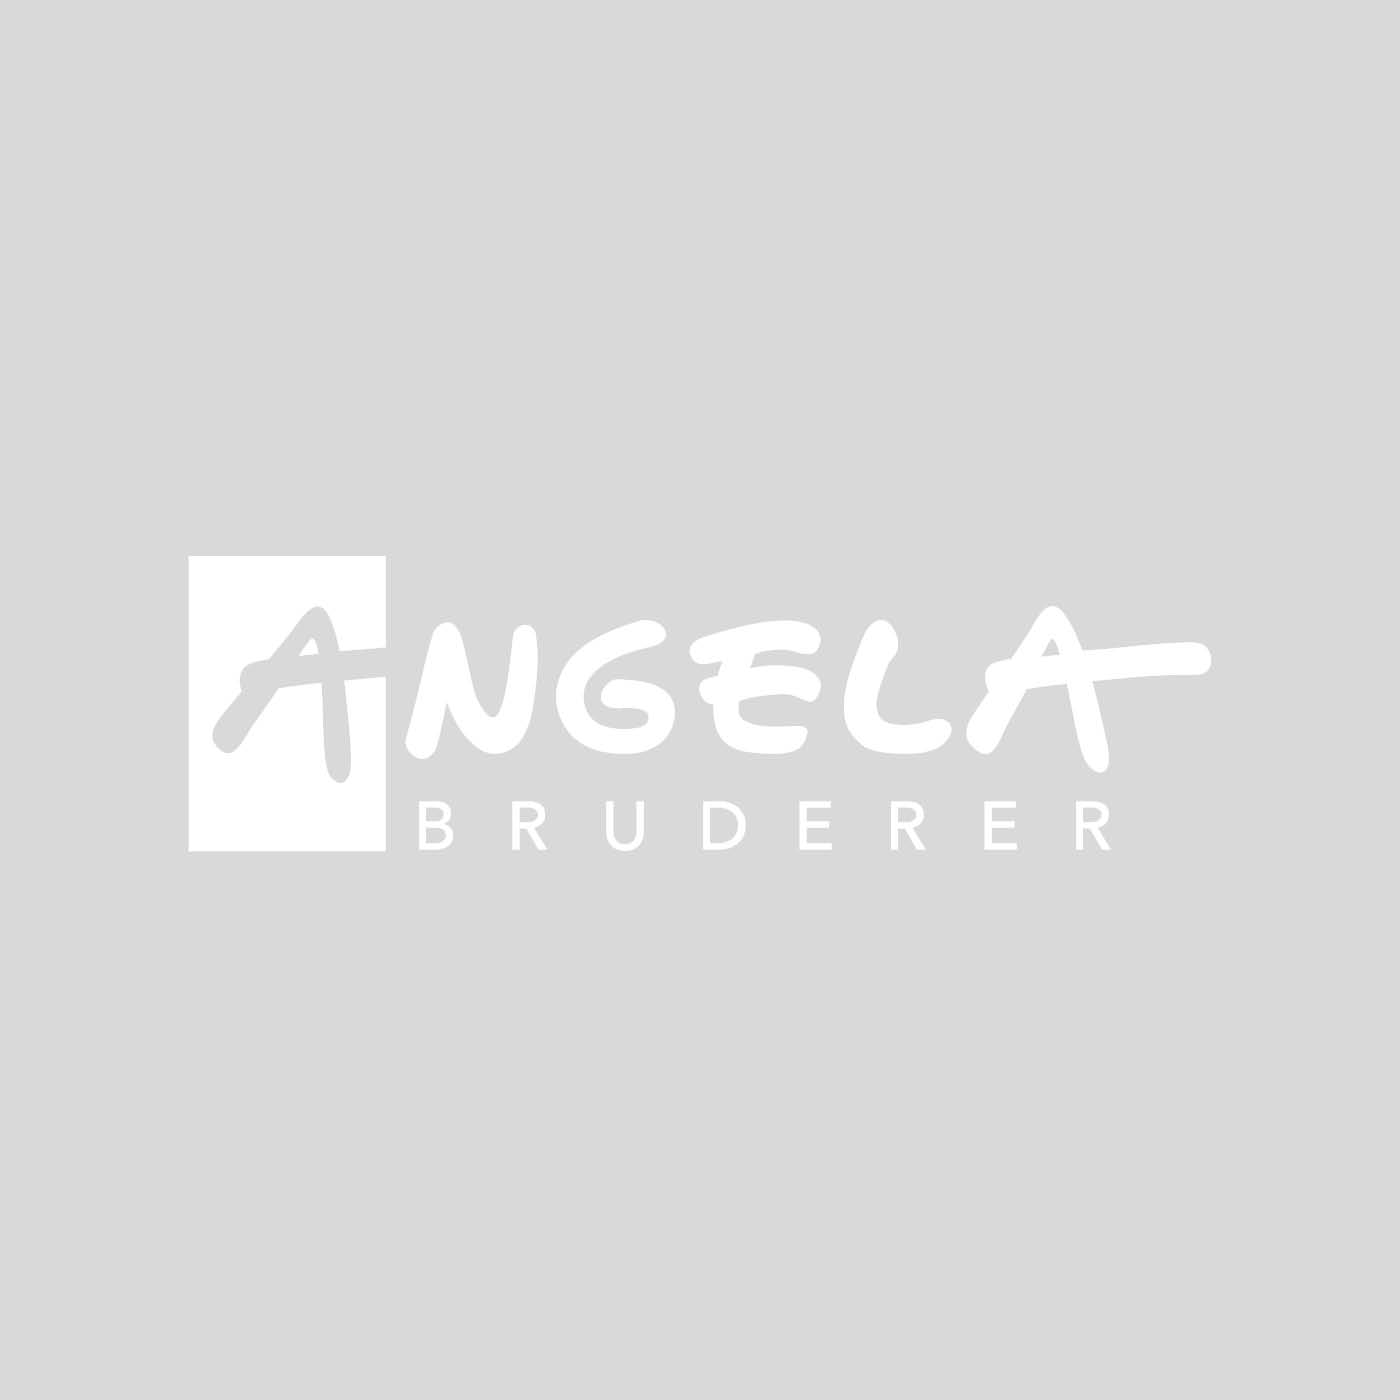 Angela Bruderer